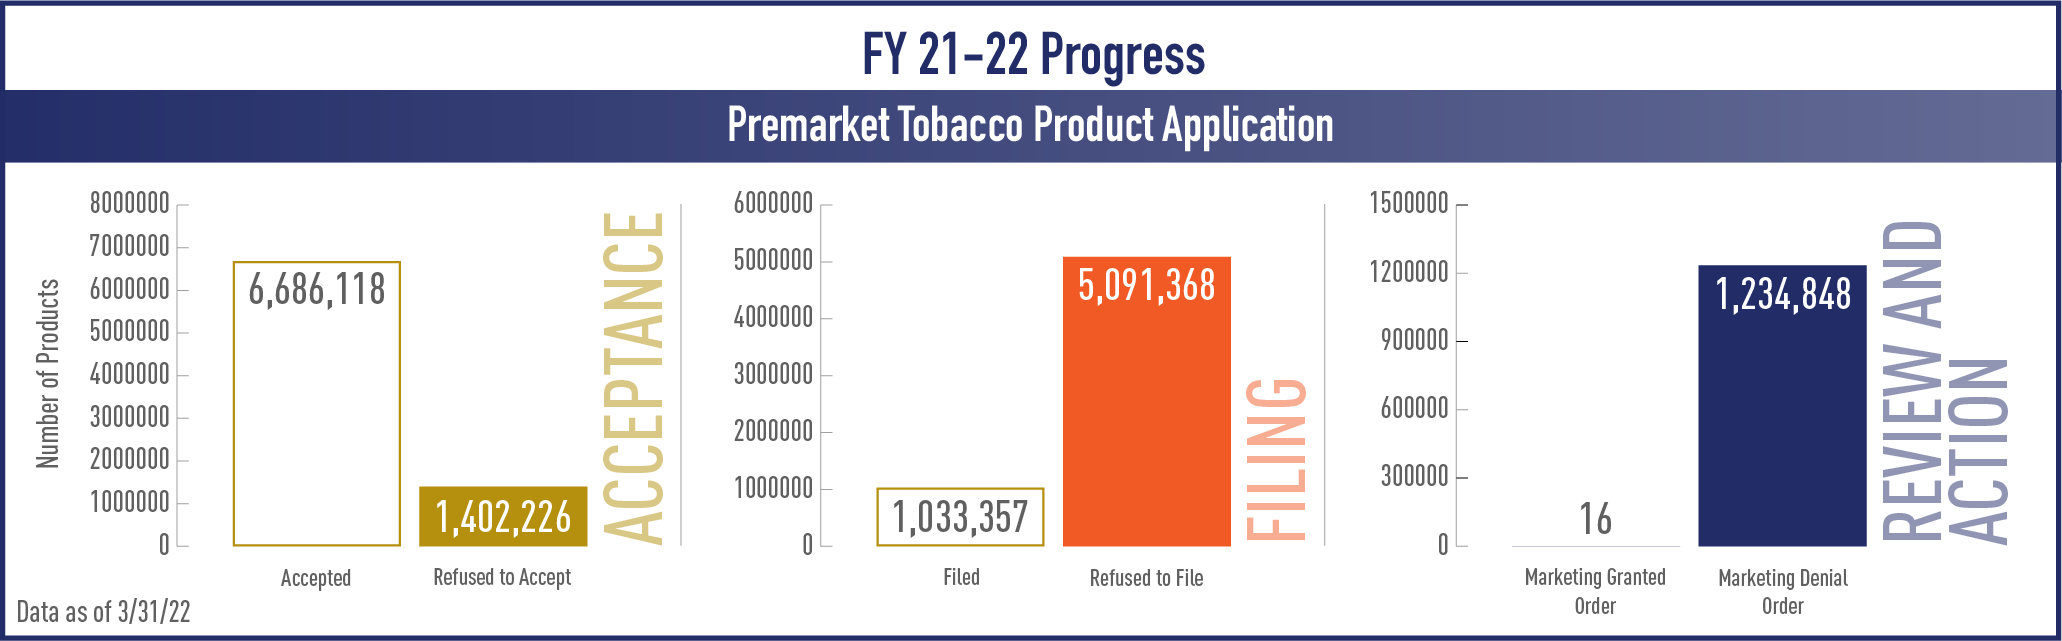 Premarket Tobacco Product Applications bar graphs